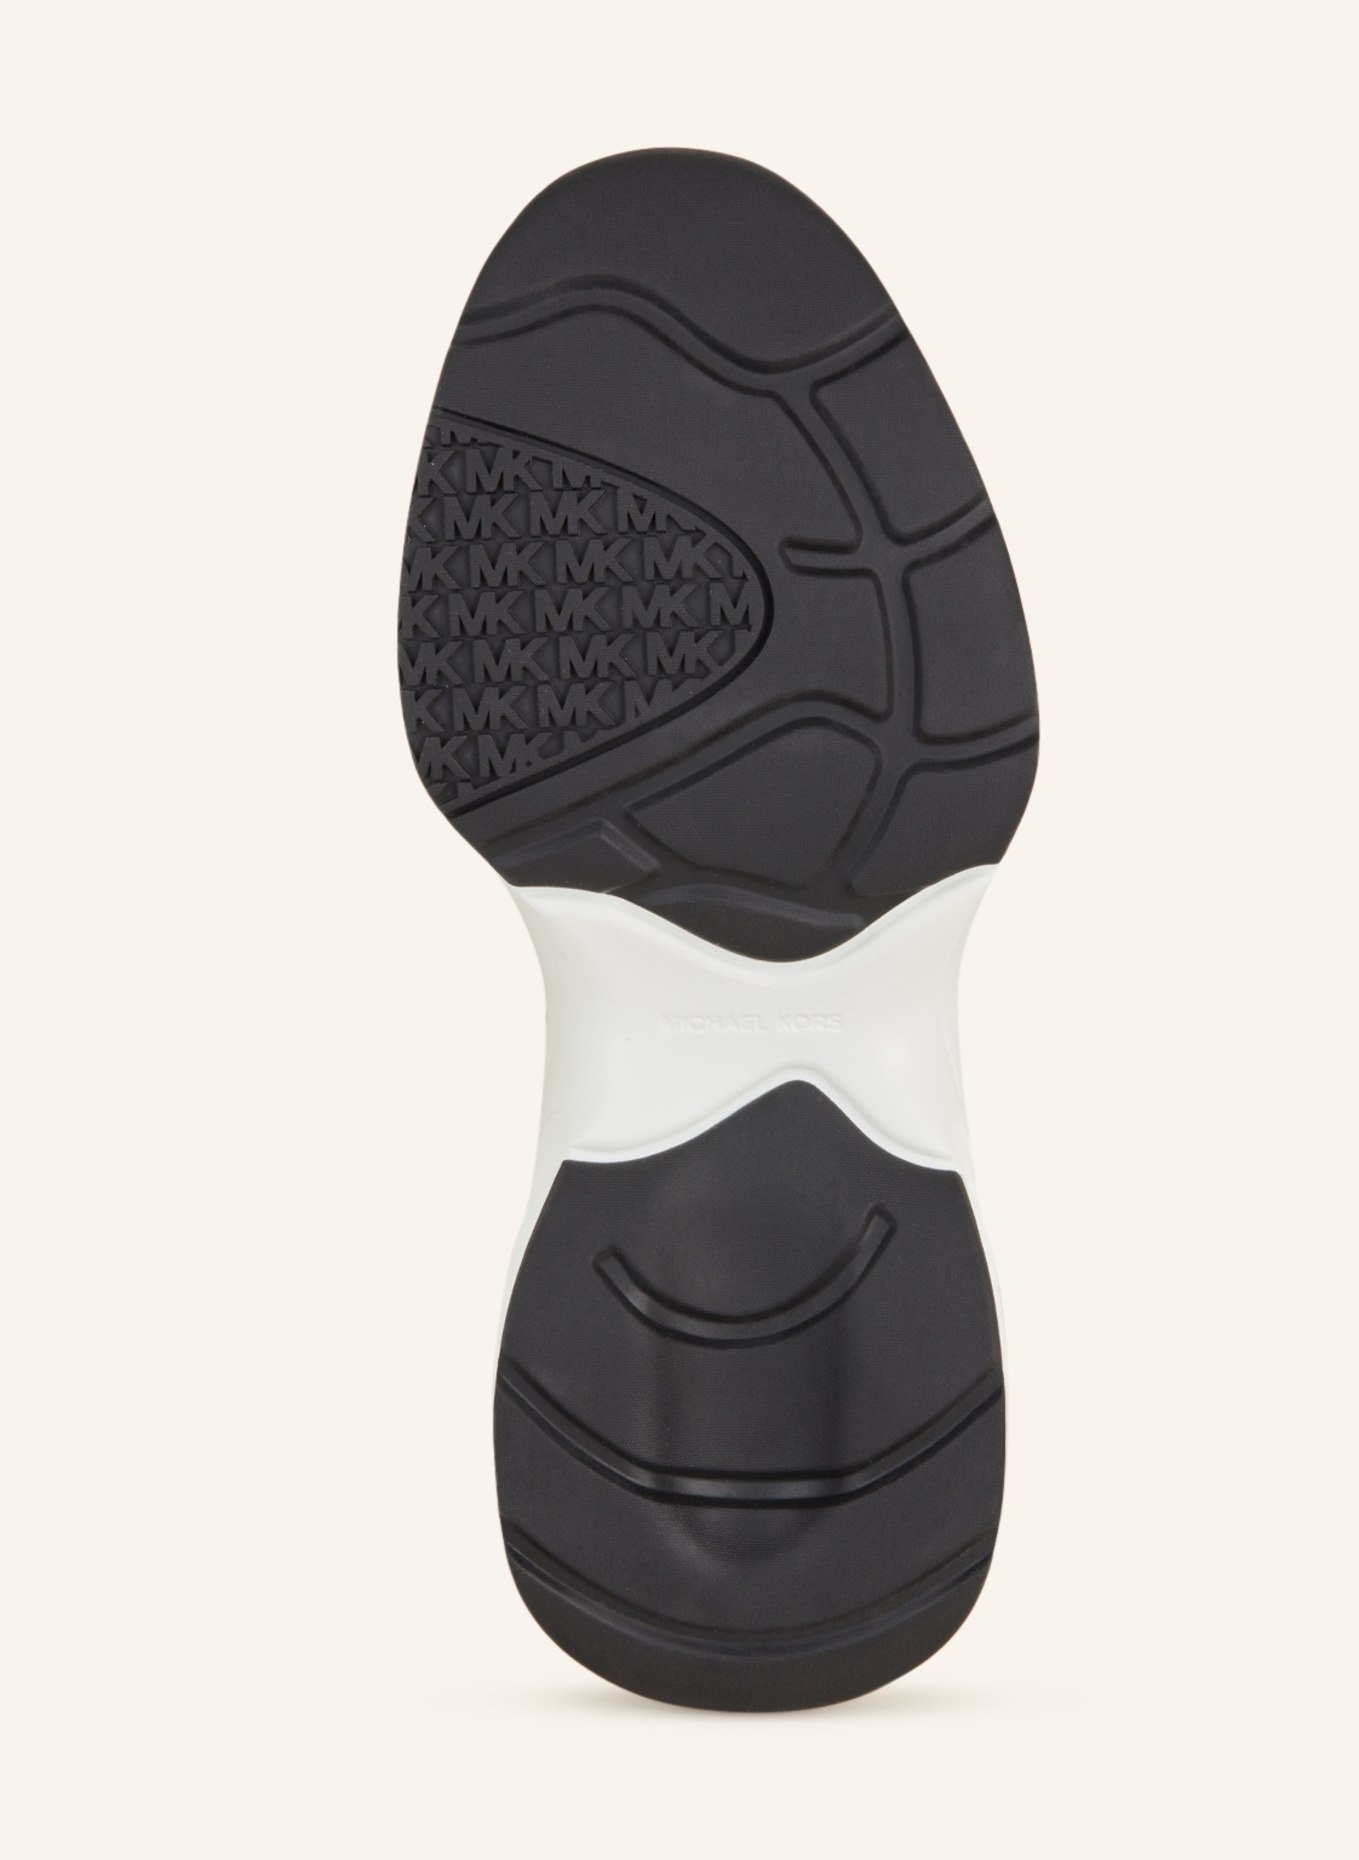 MICHAEL KORS Hightop-Sneaker, Farbe: 001 BLACK LEATHER (Bild 6)